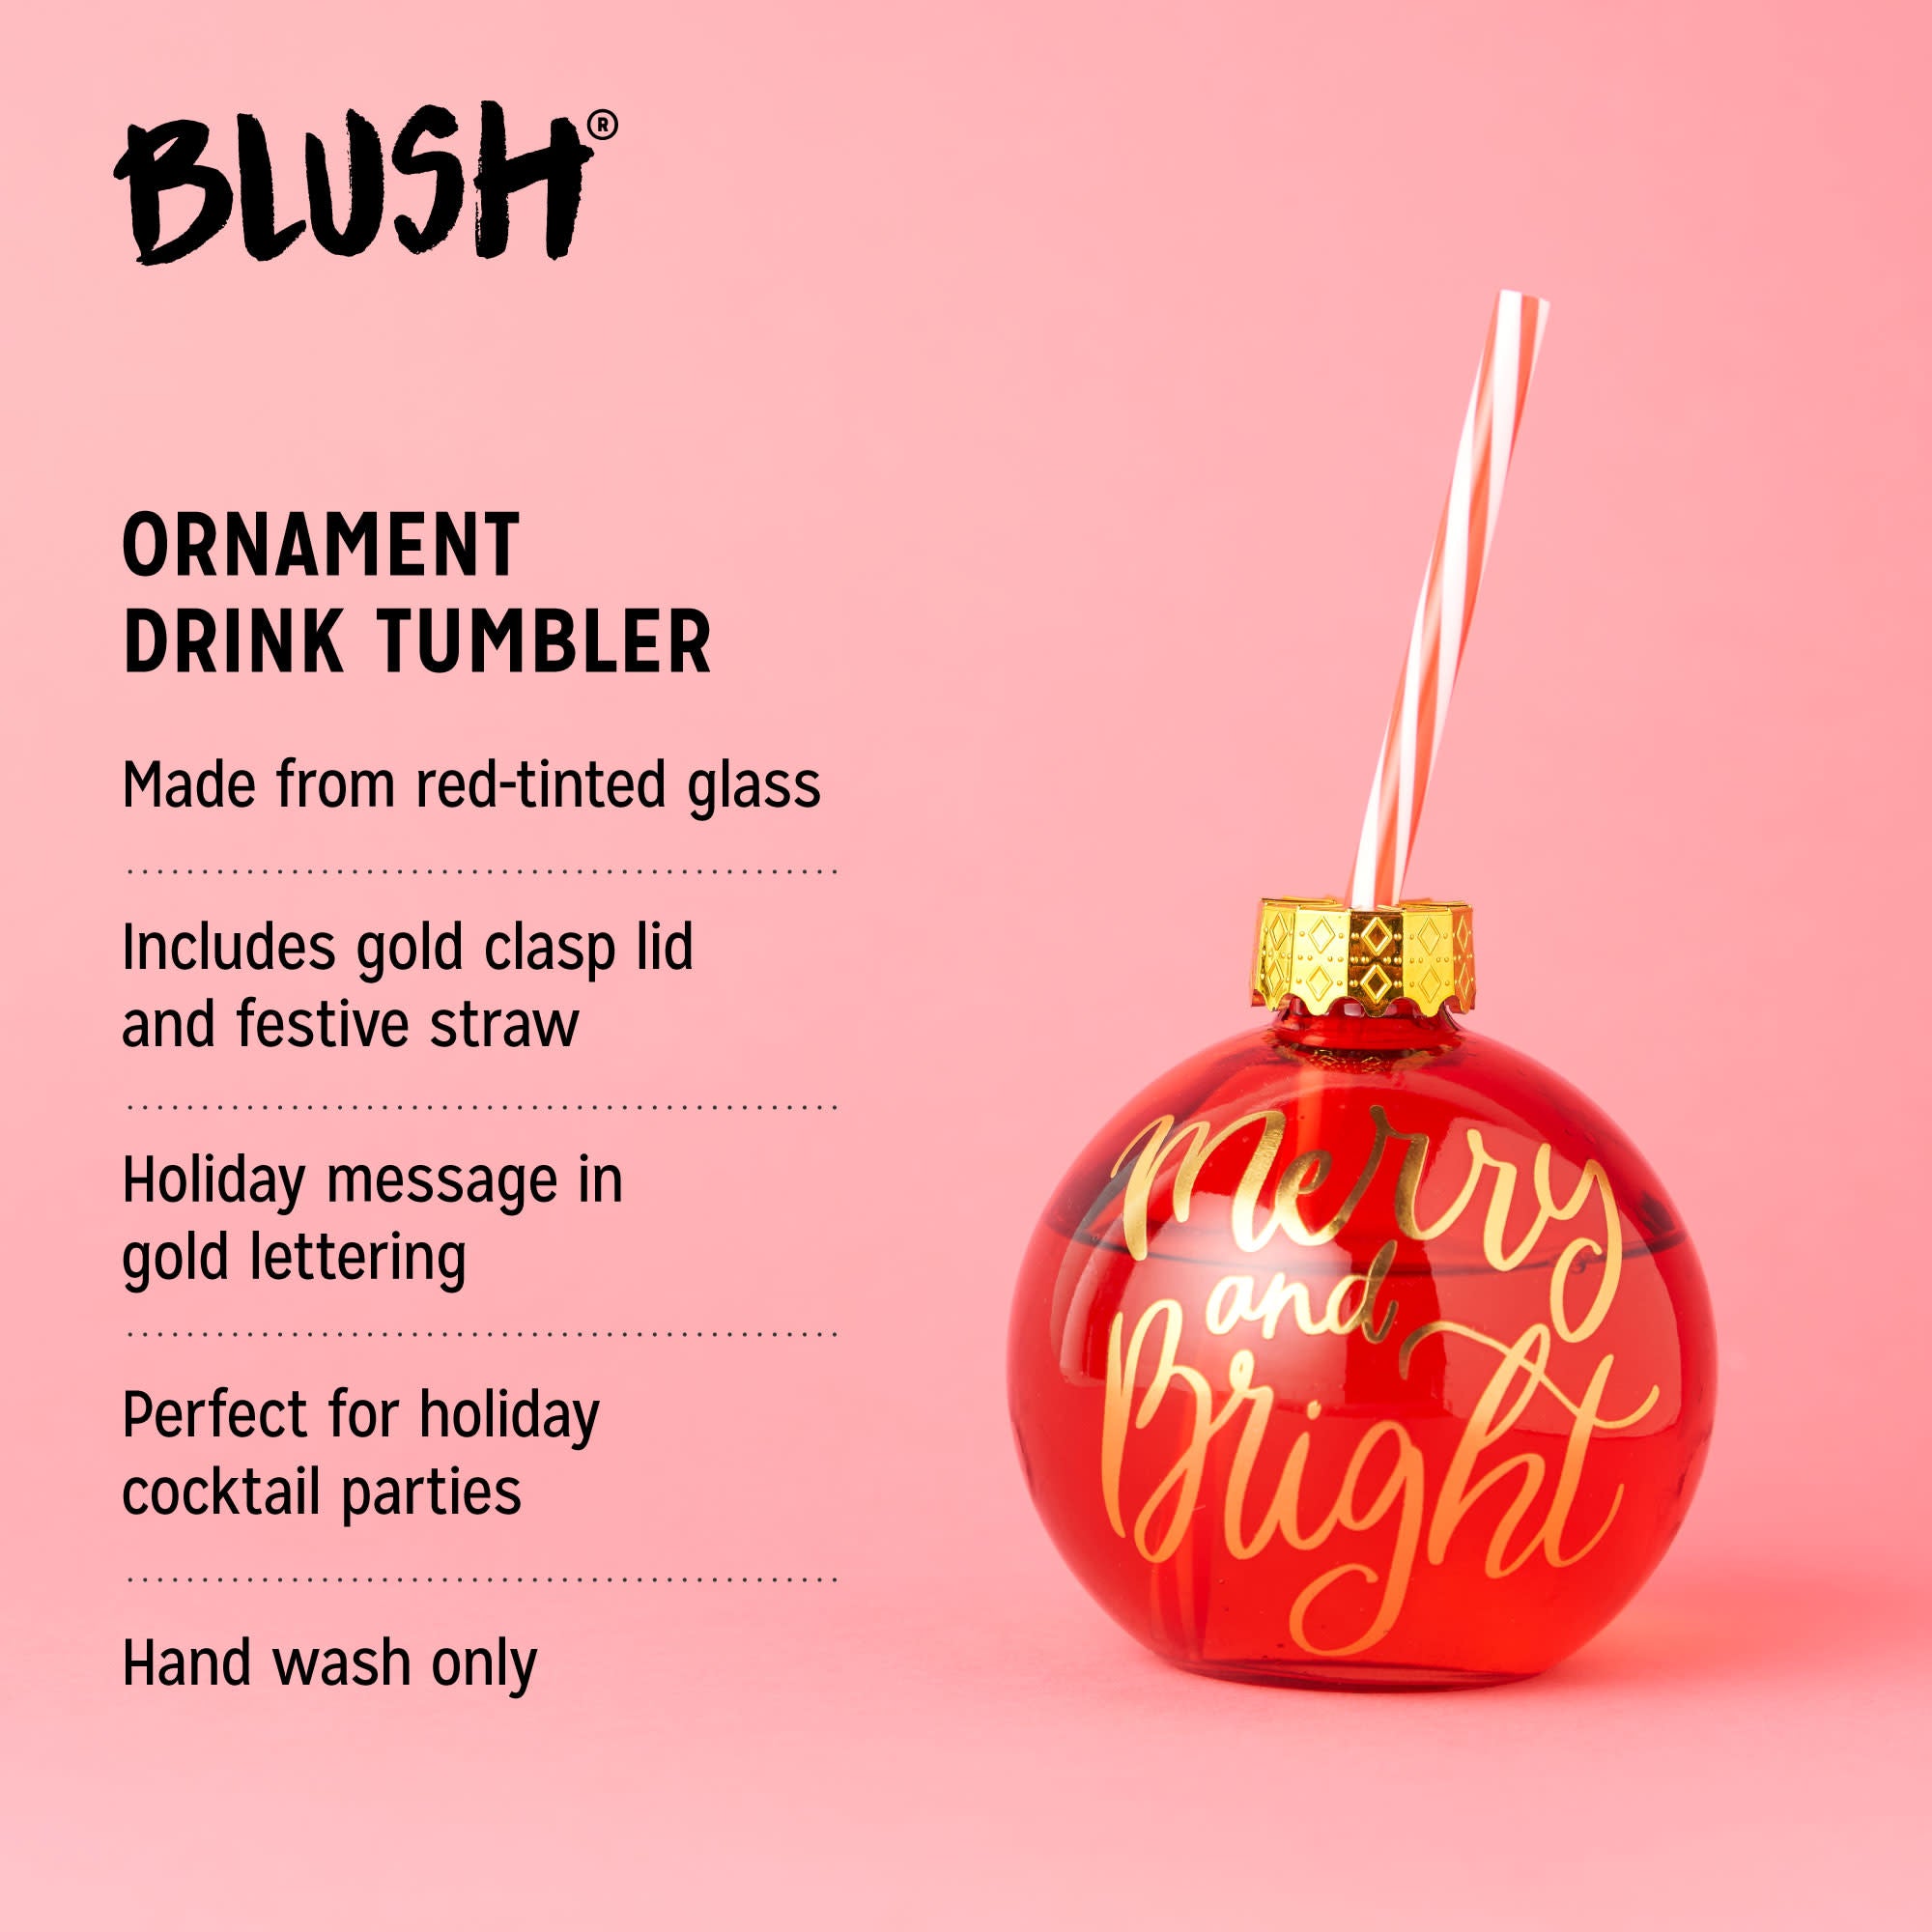 Ornament Drink Tumbler Blush